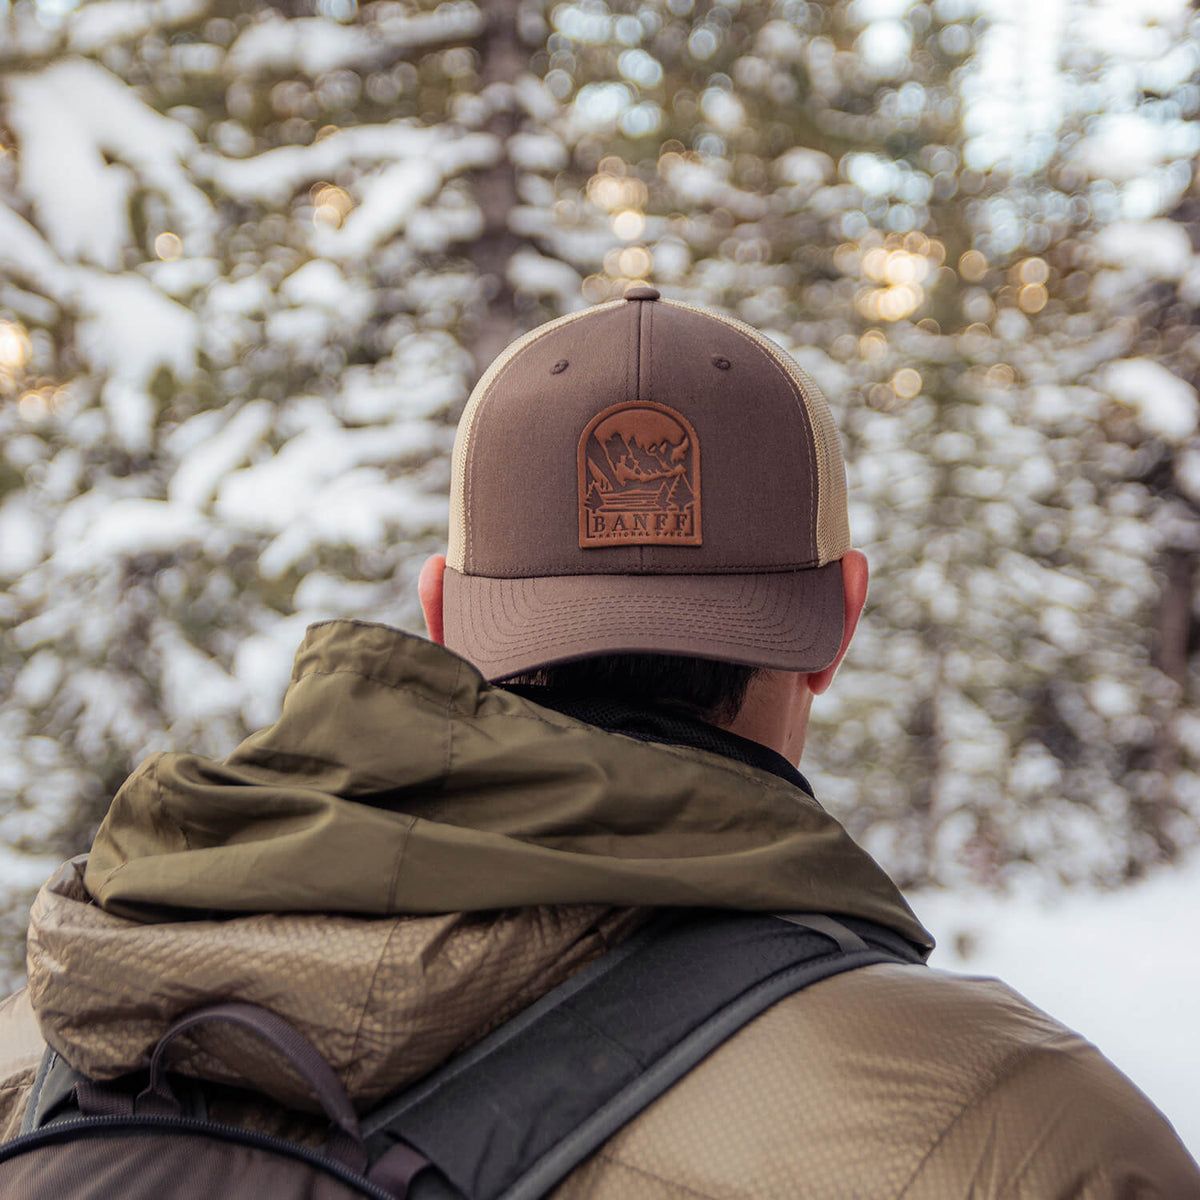 Banff National Park Leather Patch Hat